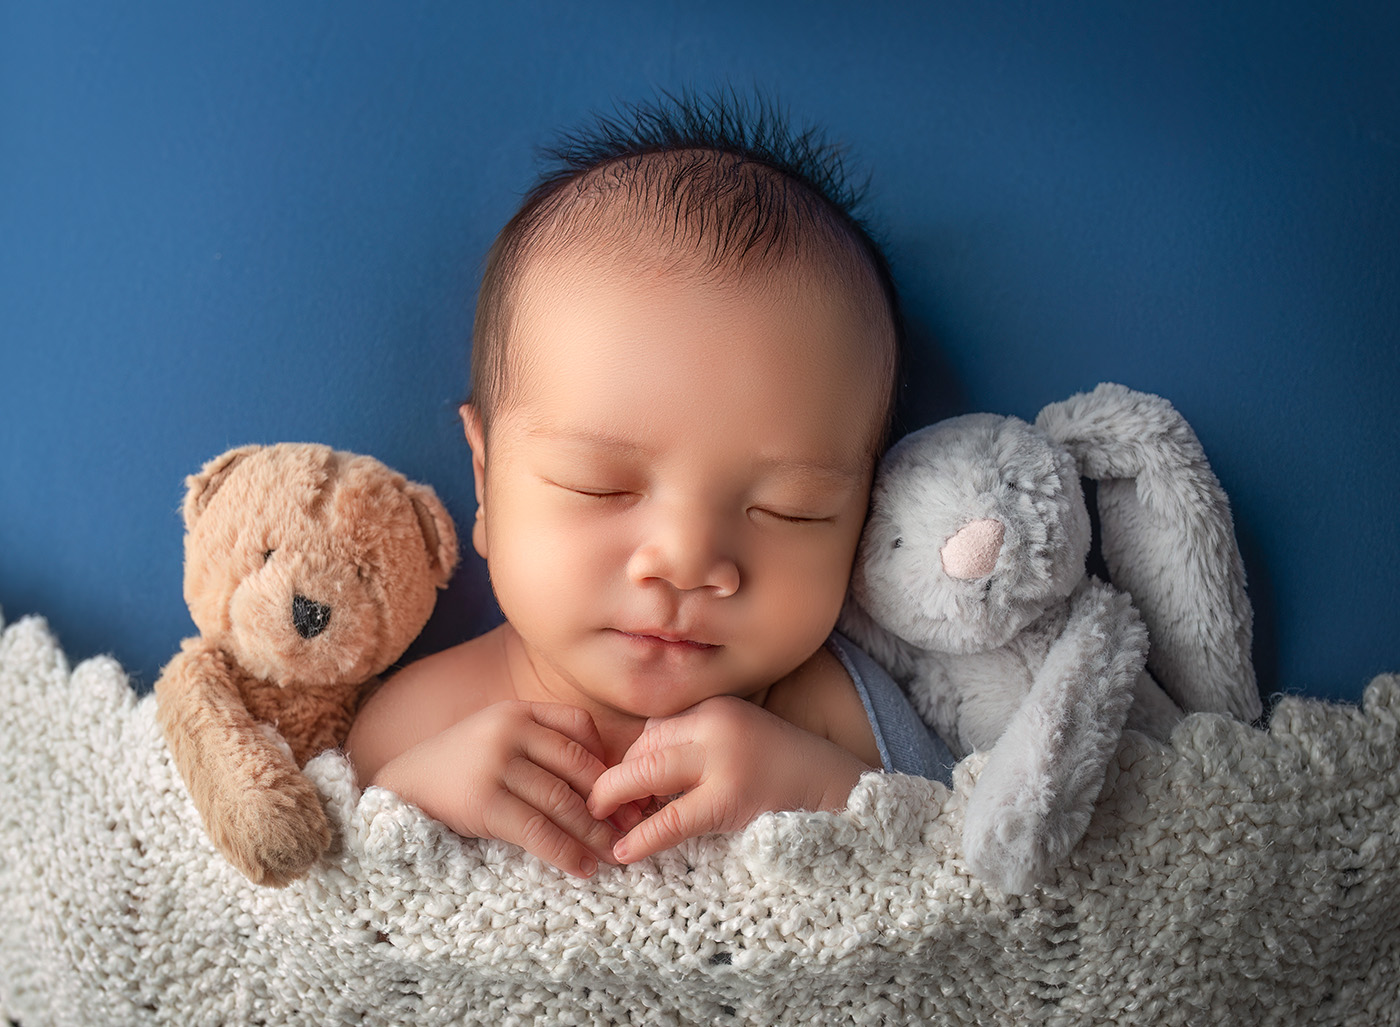 newborn baby boy sleeping tucked in with a teddy bear and a bunny rabbit